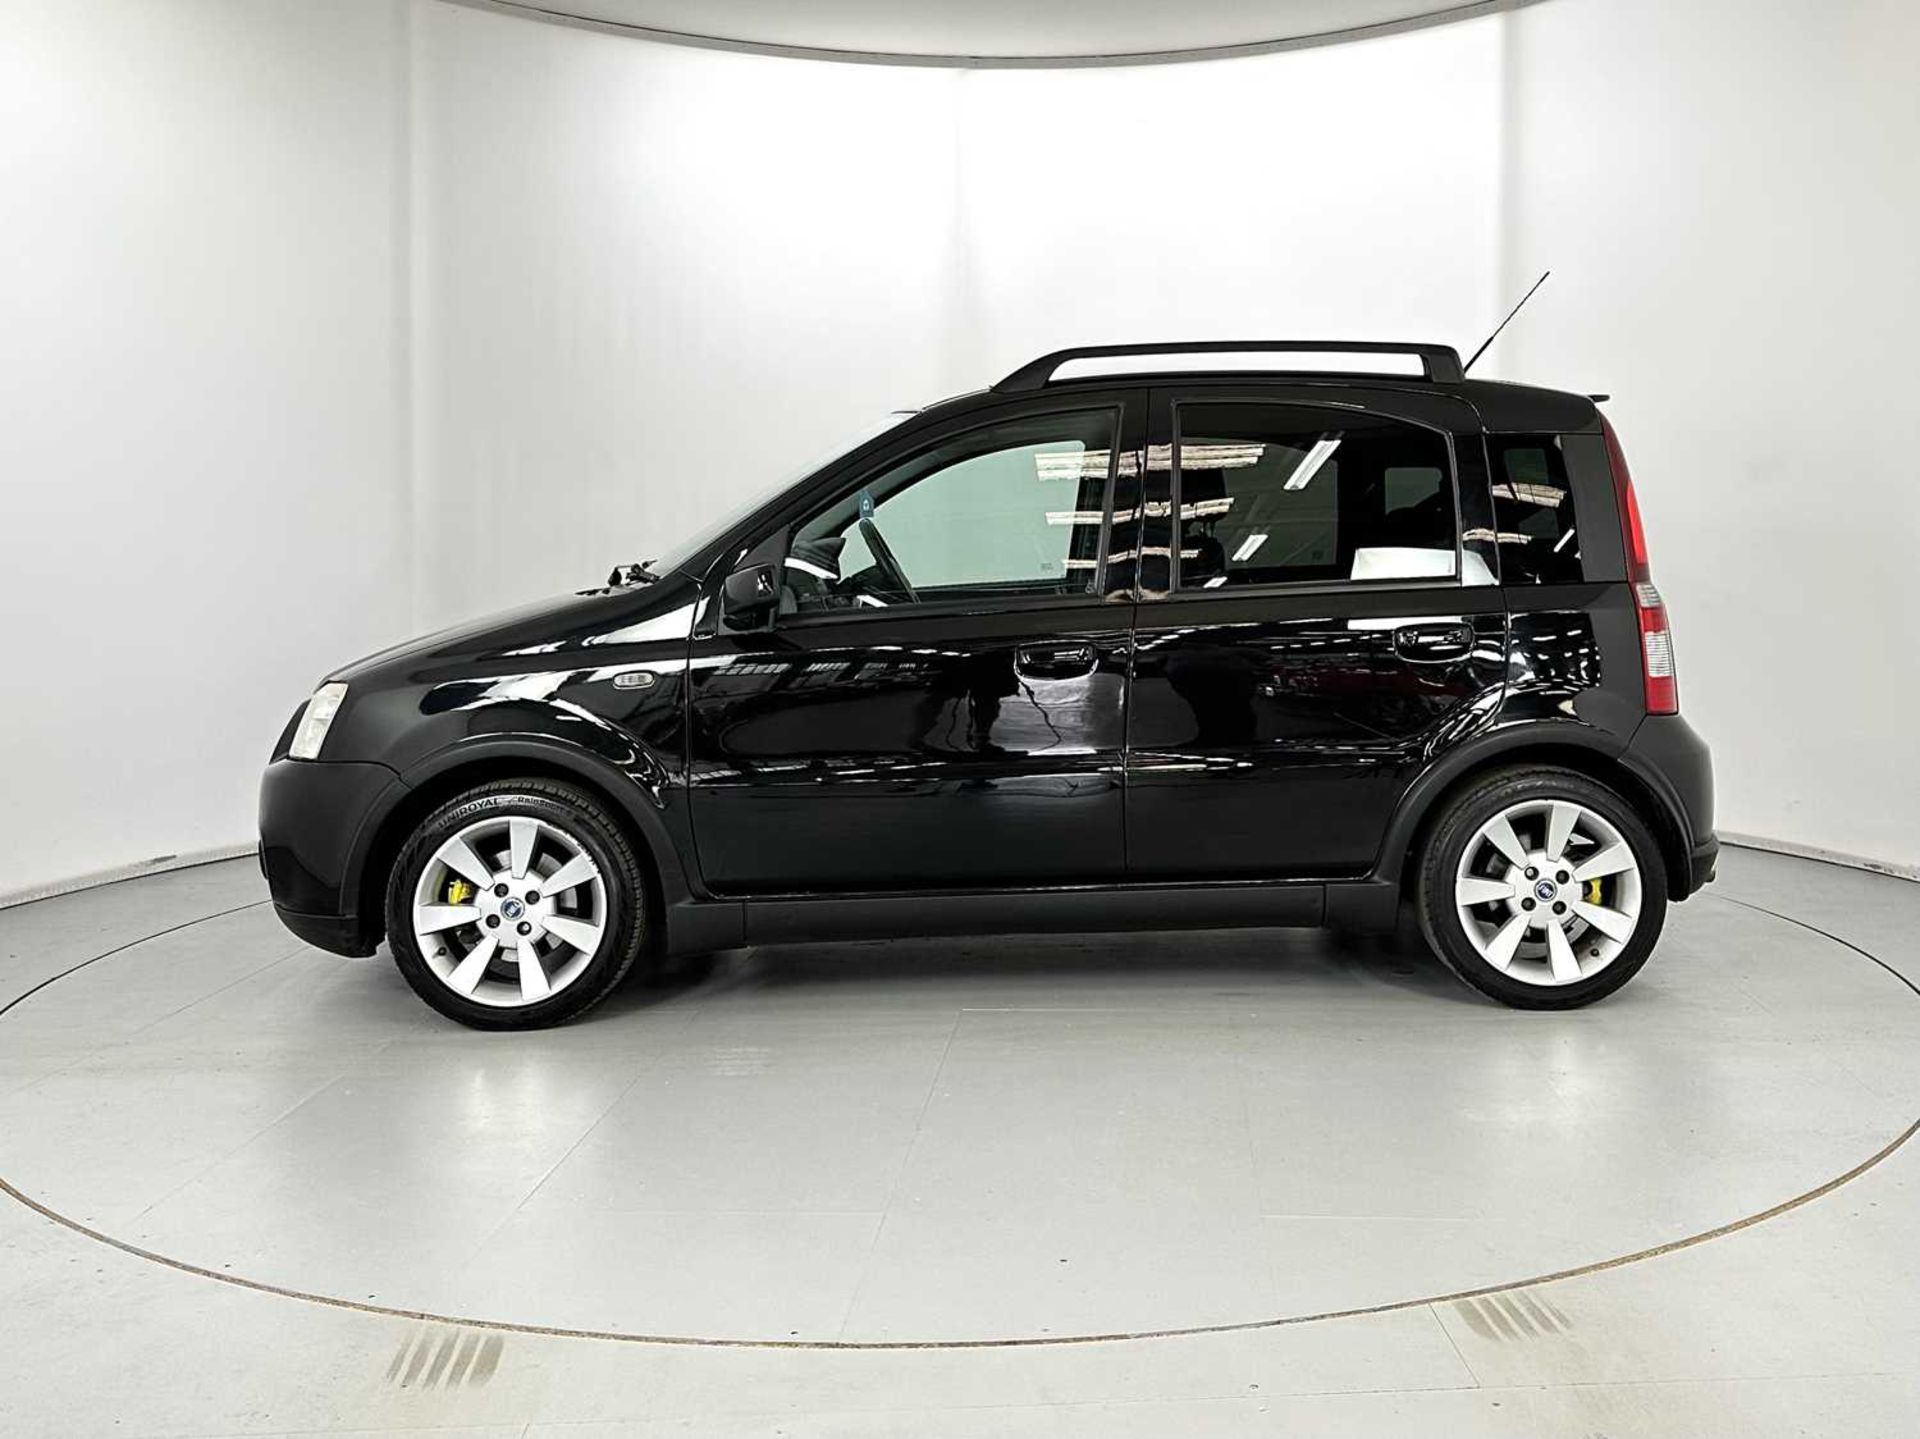 2008 Fiat Panda 100HP - Image 5 of 34